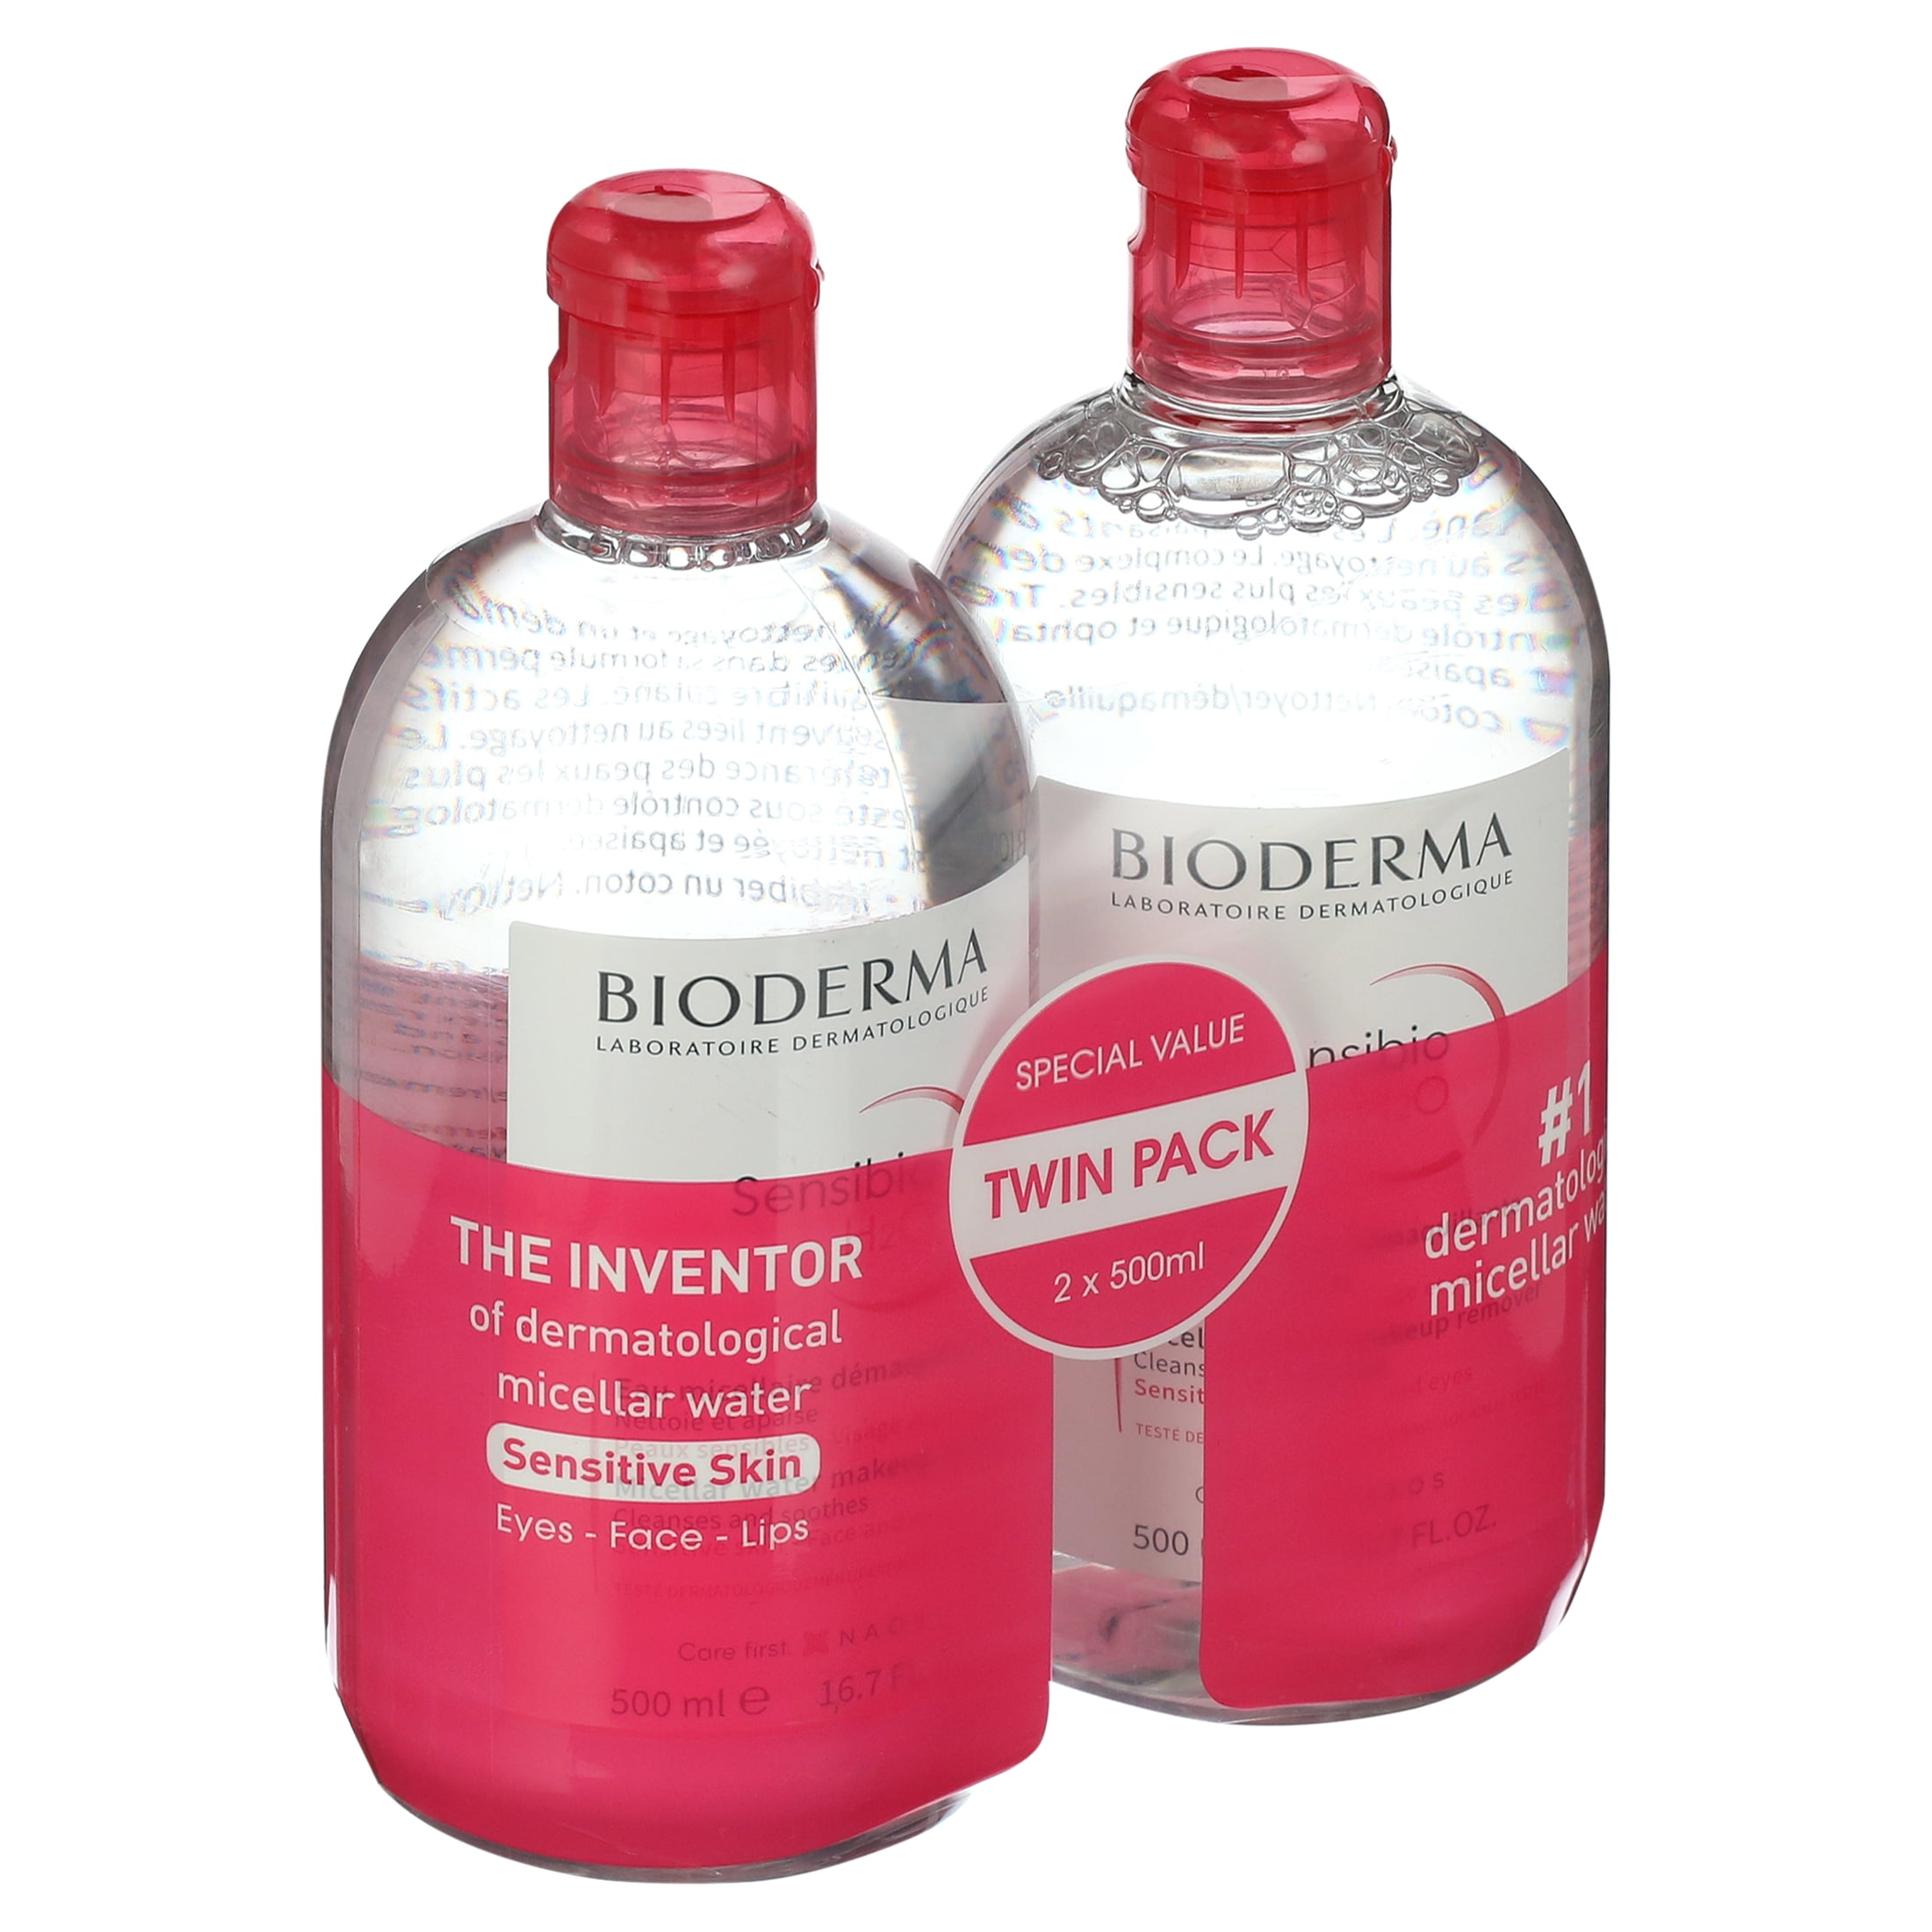 Bioderma - Sensibio - H2O Micellar Water - Makeup Remover Cleanser - Face  Cleanser for Sensitive Skin